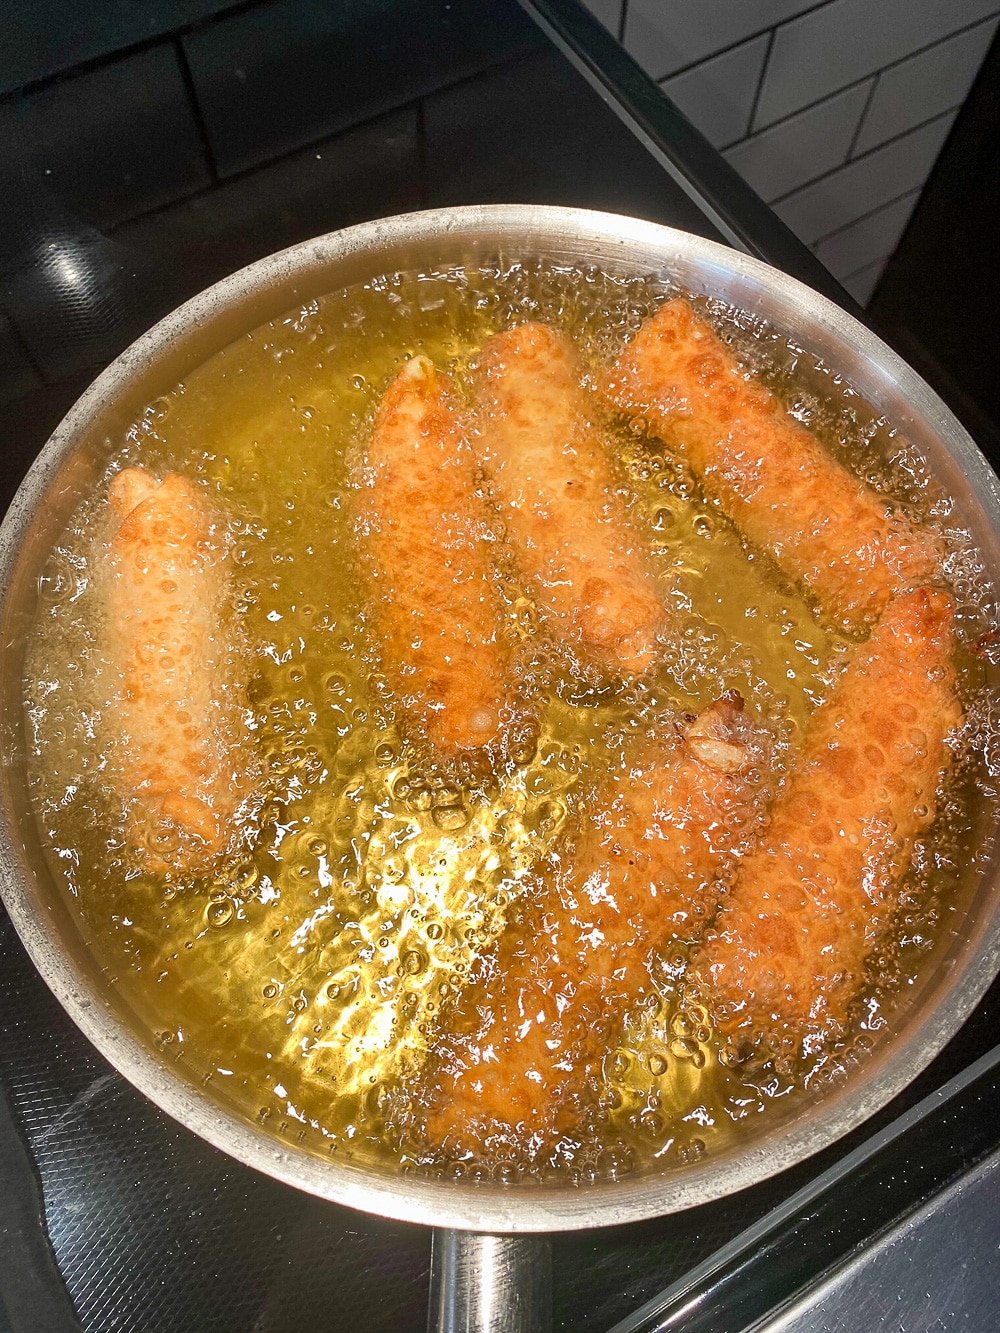 Deep frying the egg rolls